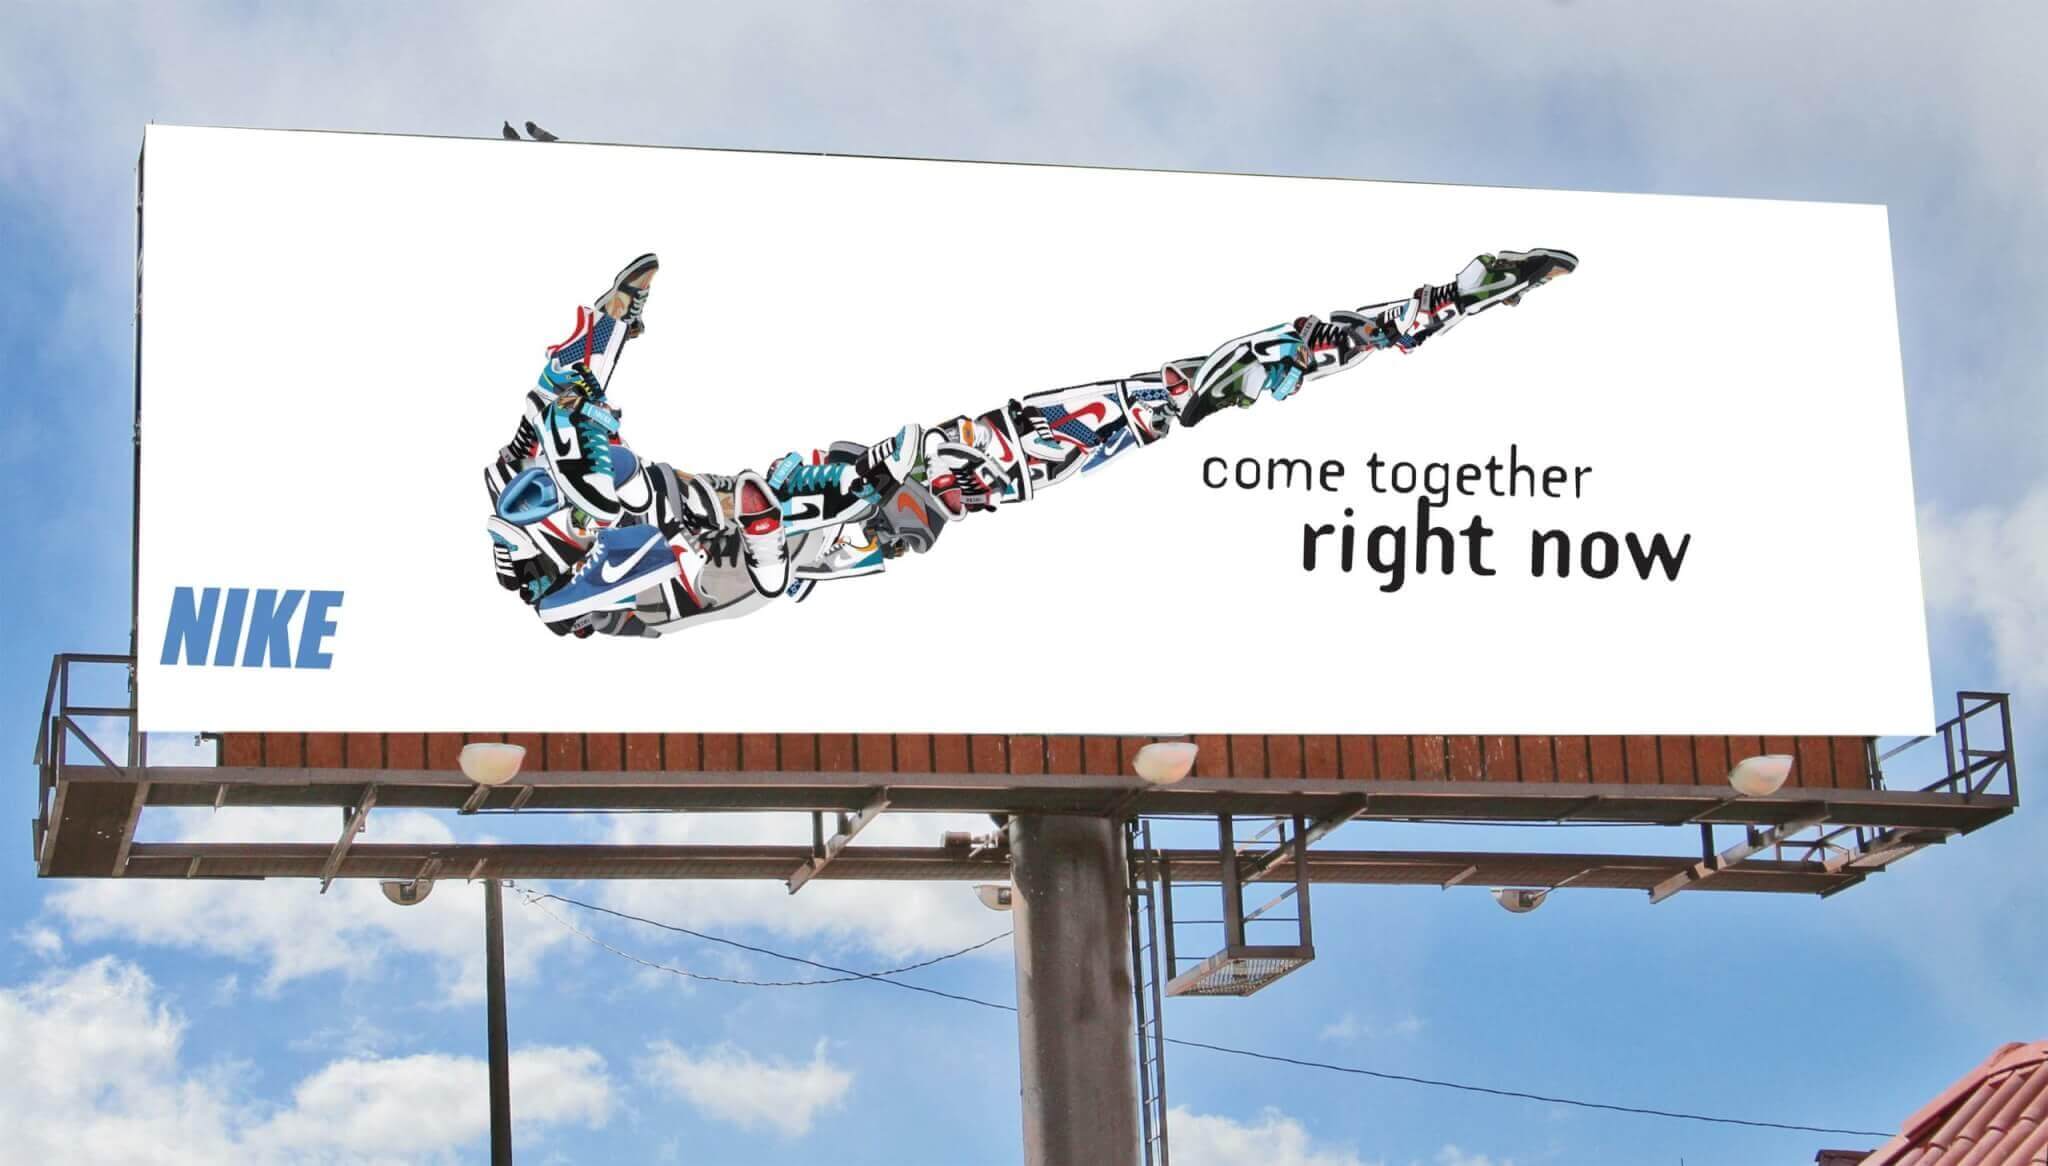 cometogether-billboard-scaled.jpg